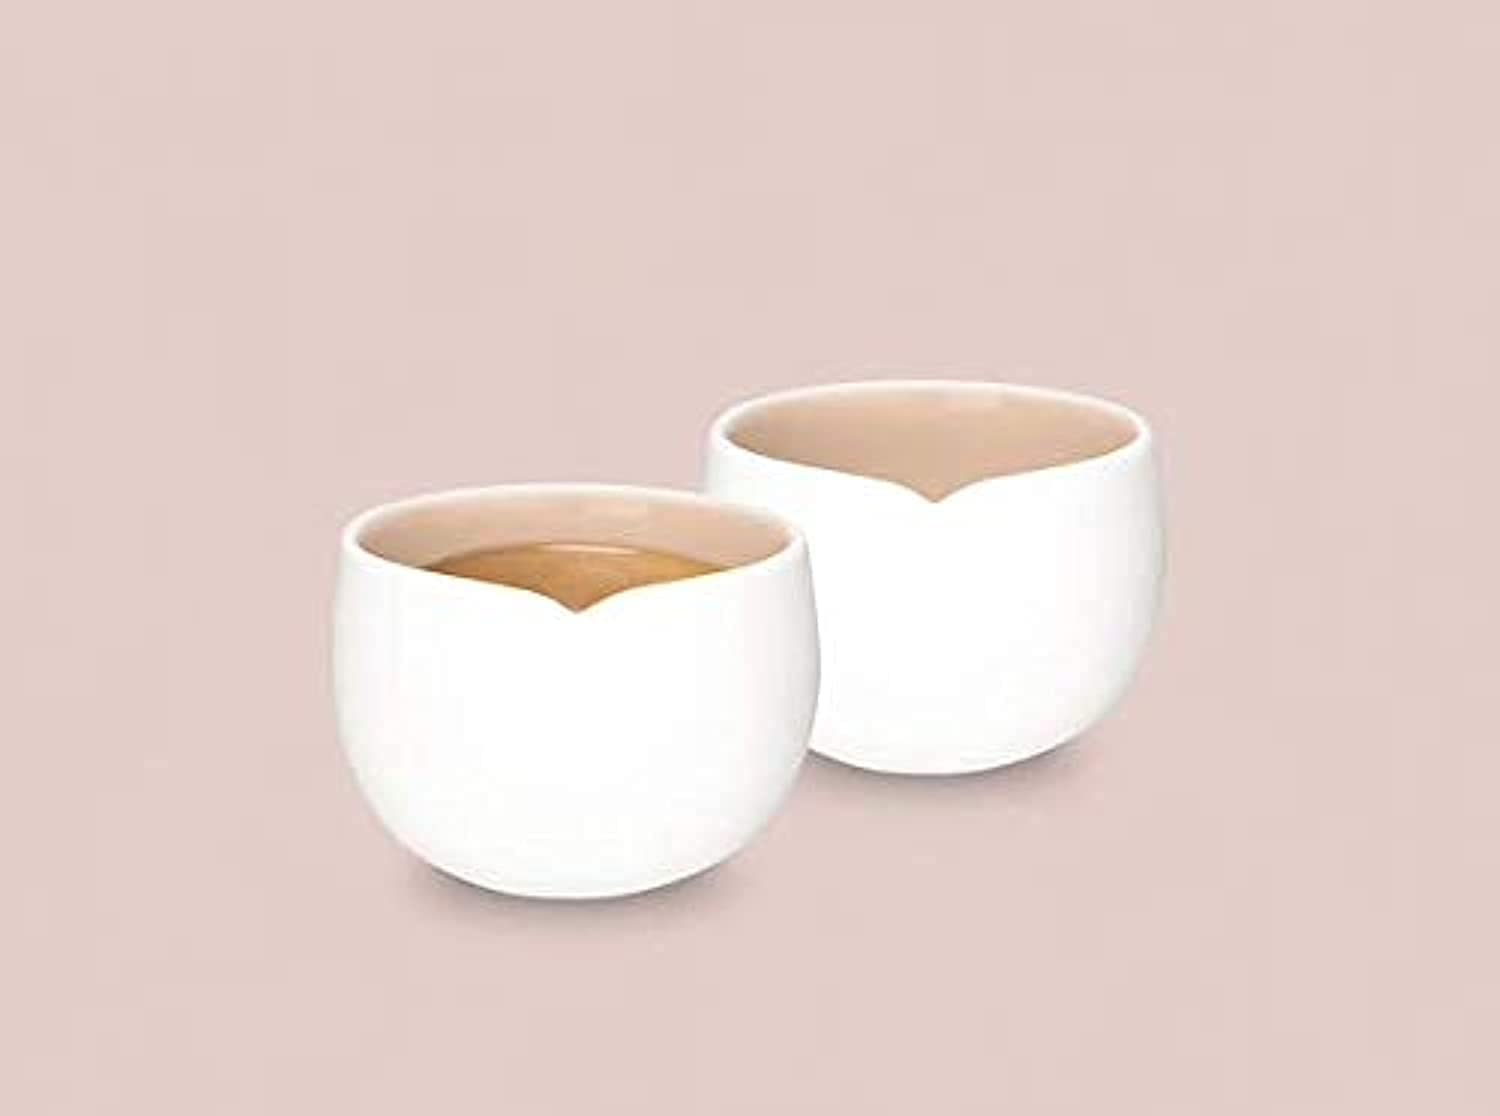 Nespresso Origin Collection 2 Espresso Coffee Cups Set, White Porcelain, New